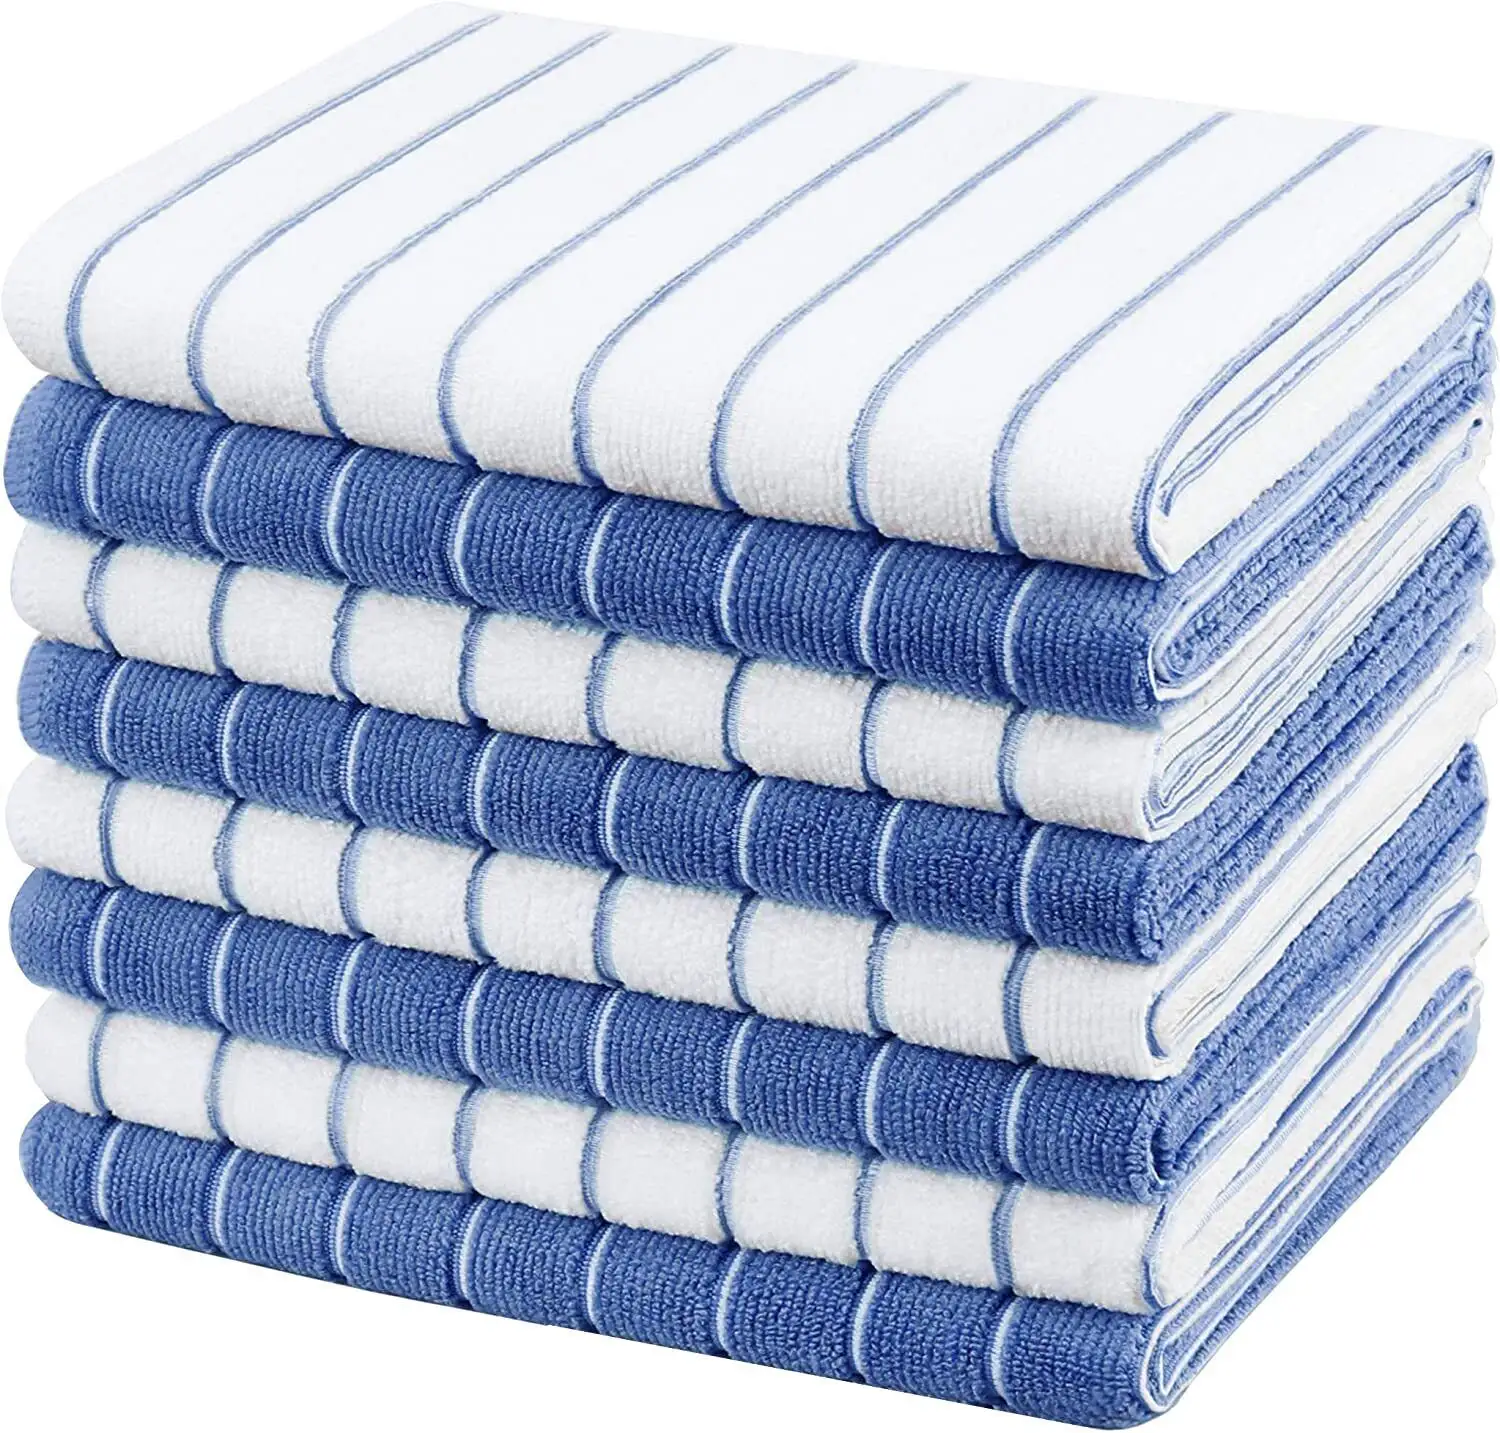 microfiber strip terry cloths 14/2 floor cleaning cloth 8 Pack Microfibre Tea Towels Soft Super Absorbent